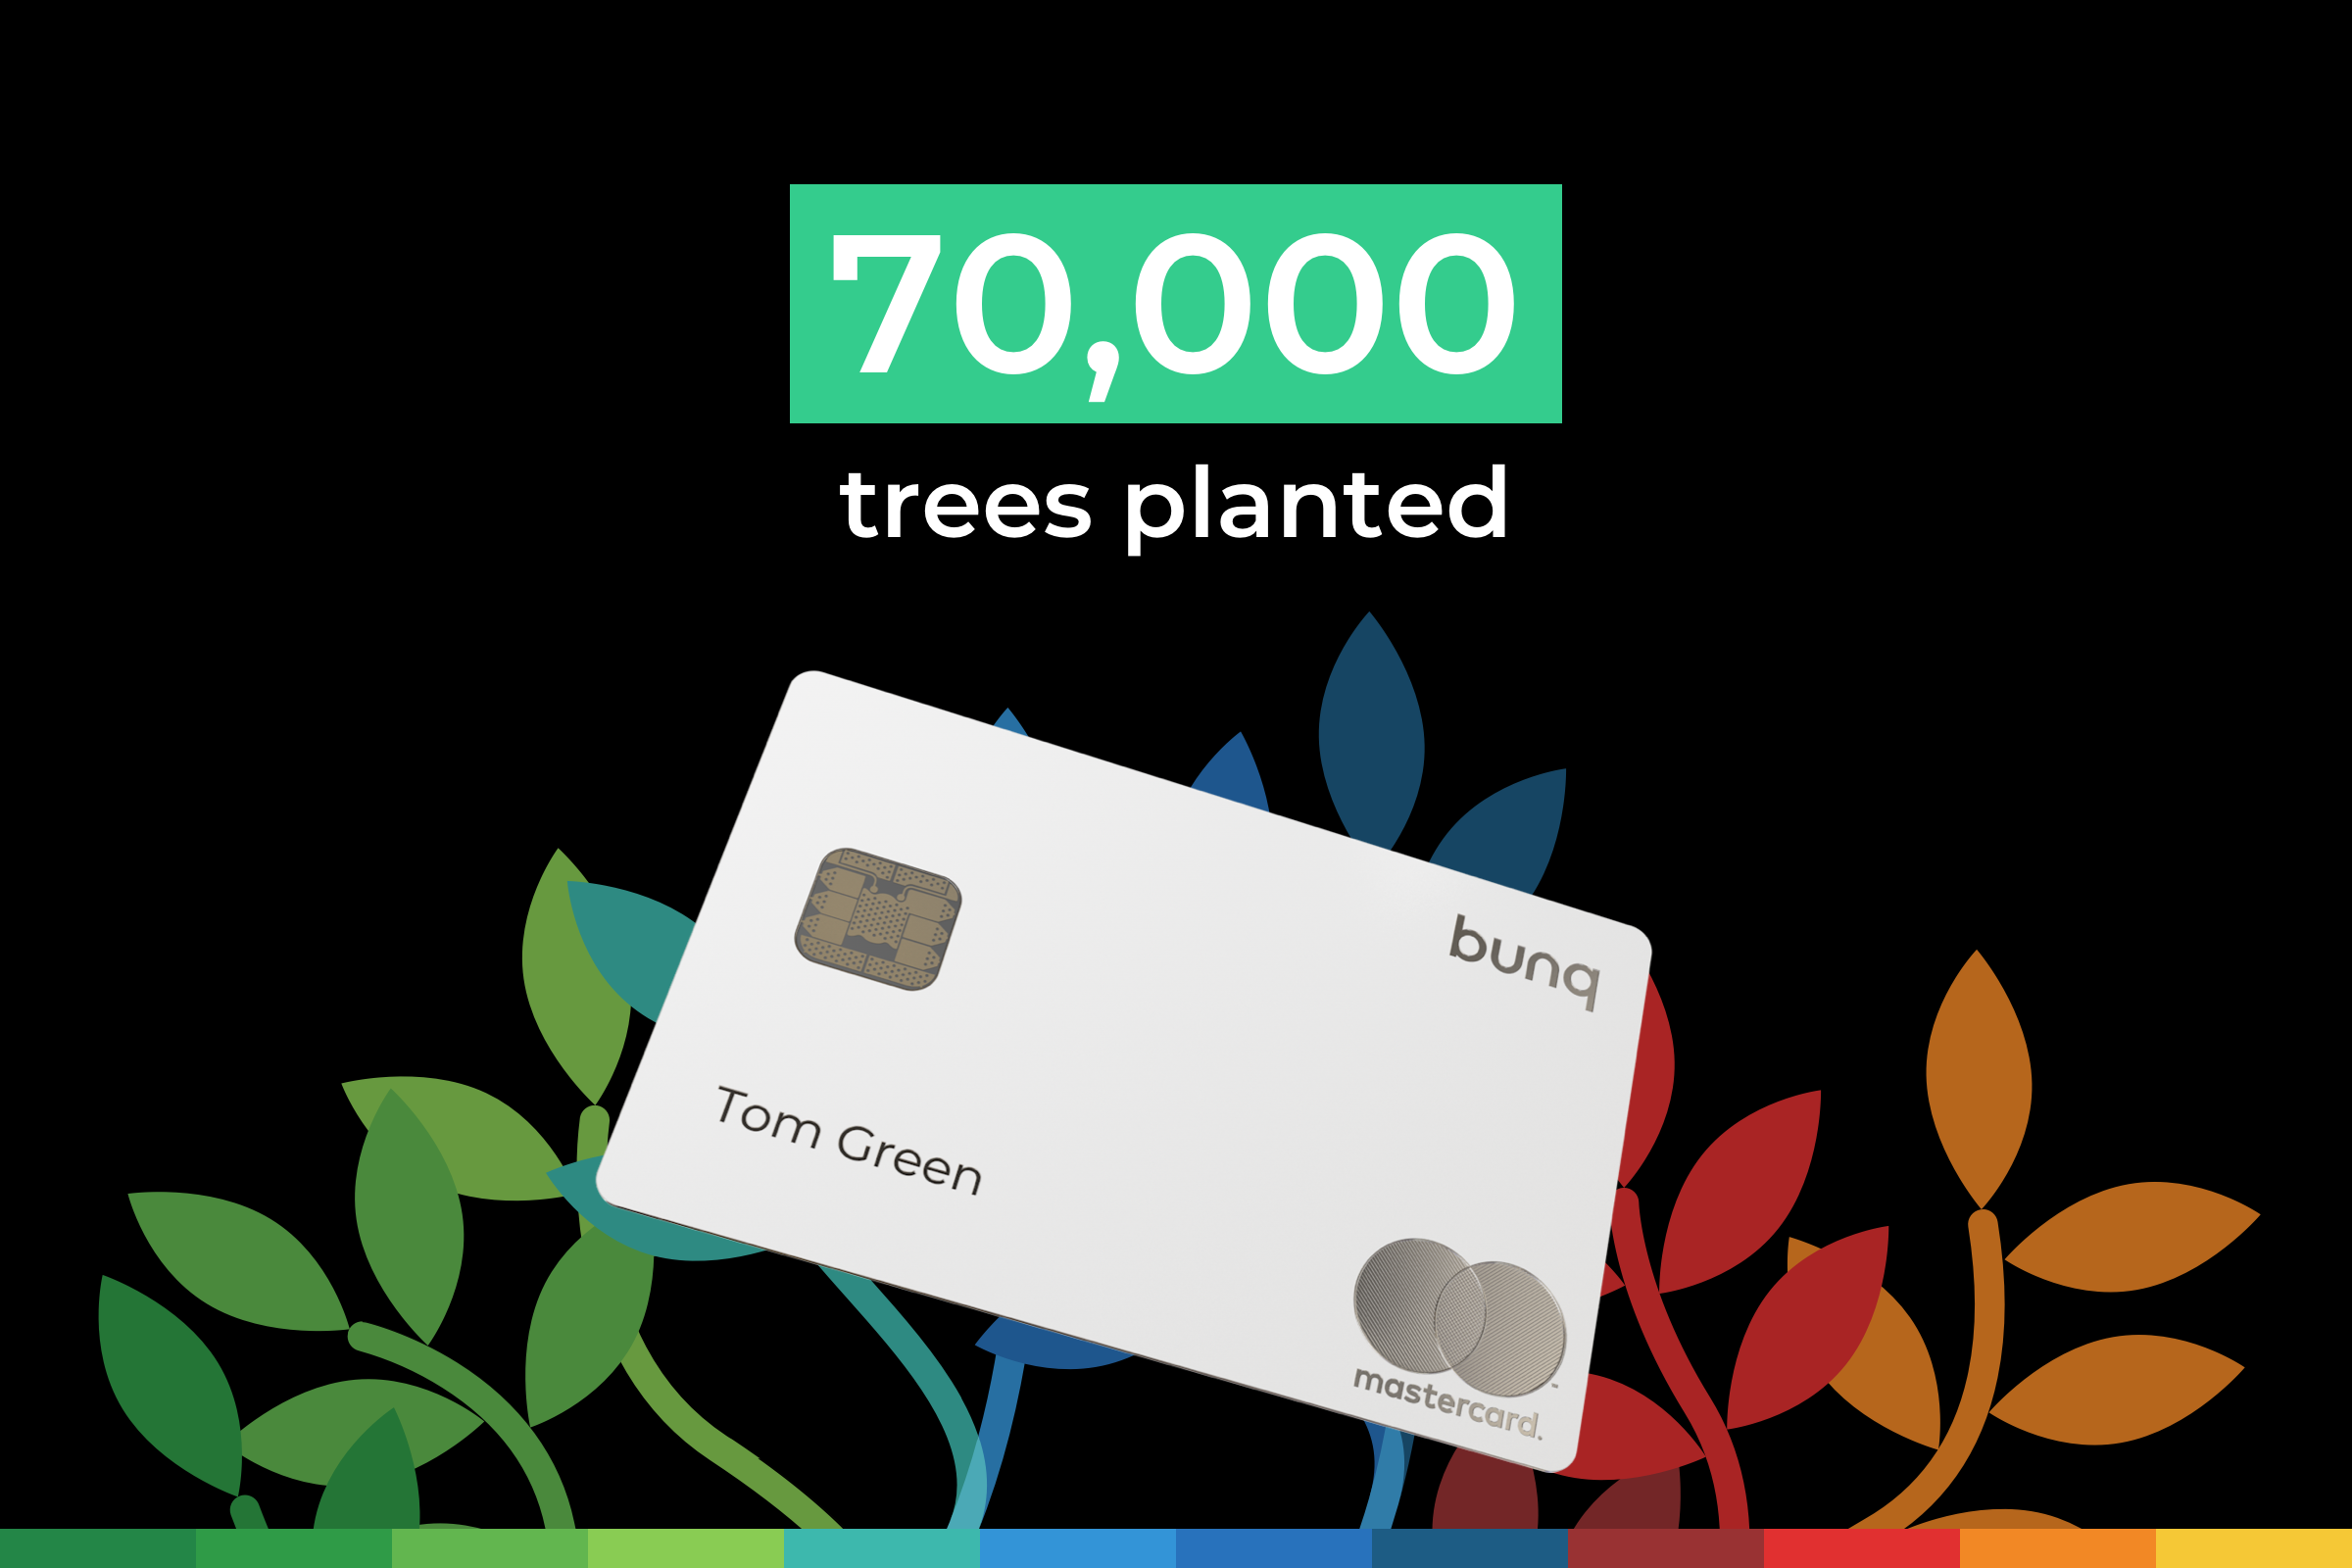 Bunq_2019_recap_Green_Card_70k_trees_planted